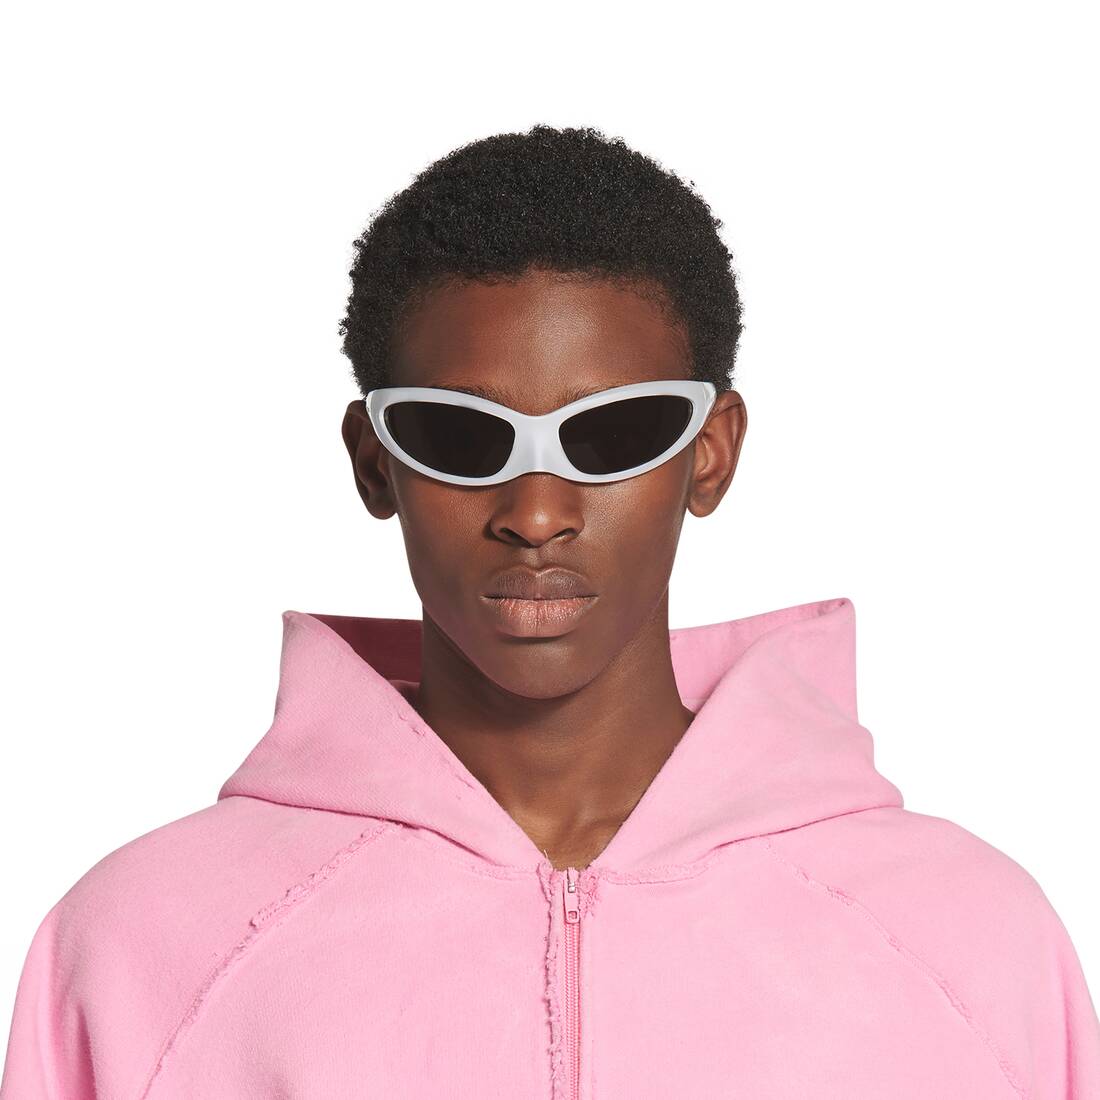 Balenciaga - Ski Cat Sunglasses - Black Blue - Sunglasses - Balenciaga  Eyewear - Avvenice